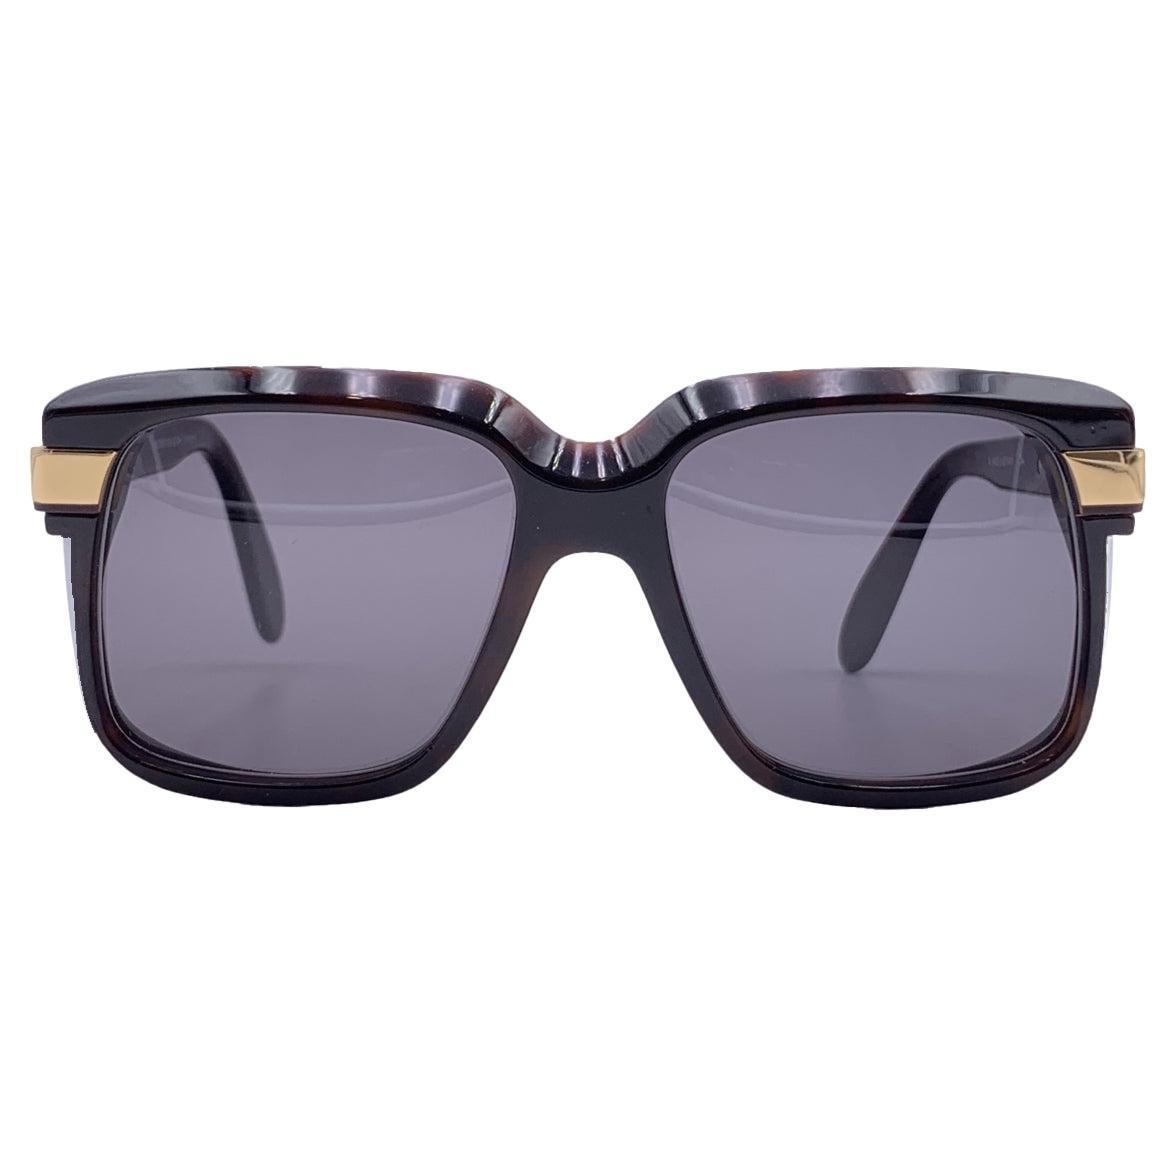 Cazal Brown Acetate Sunglasses Mod. 680/3 Col. 80 56/18 145 mm